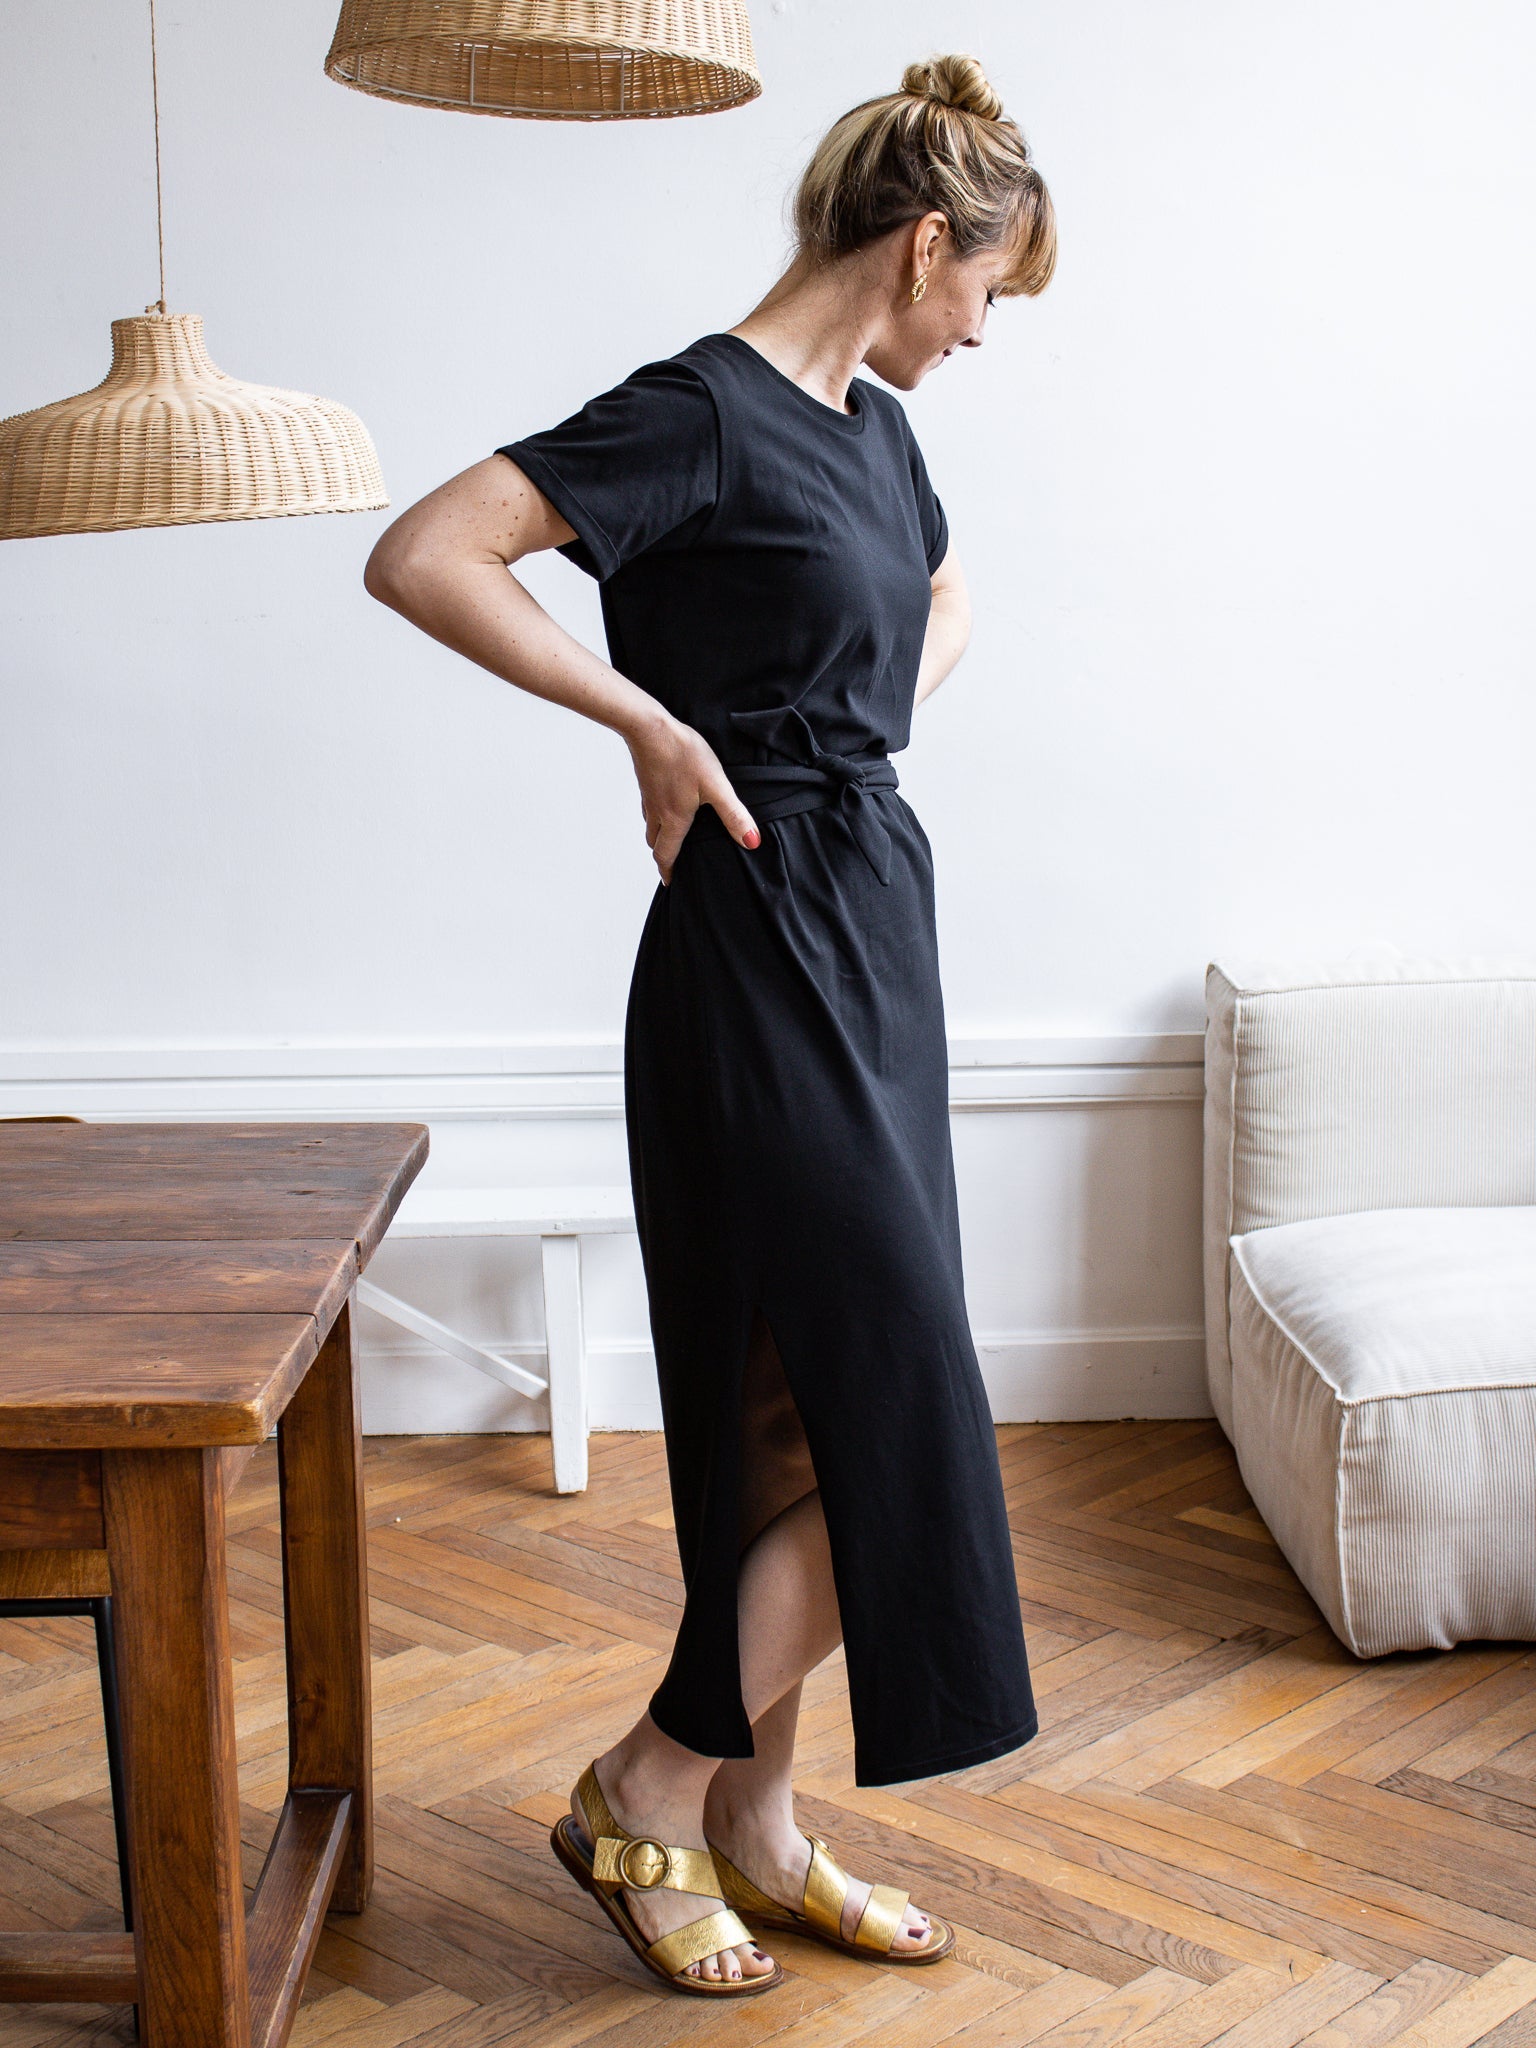 Joli Kit Couture - Robe Michelle noire - Joli Lab